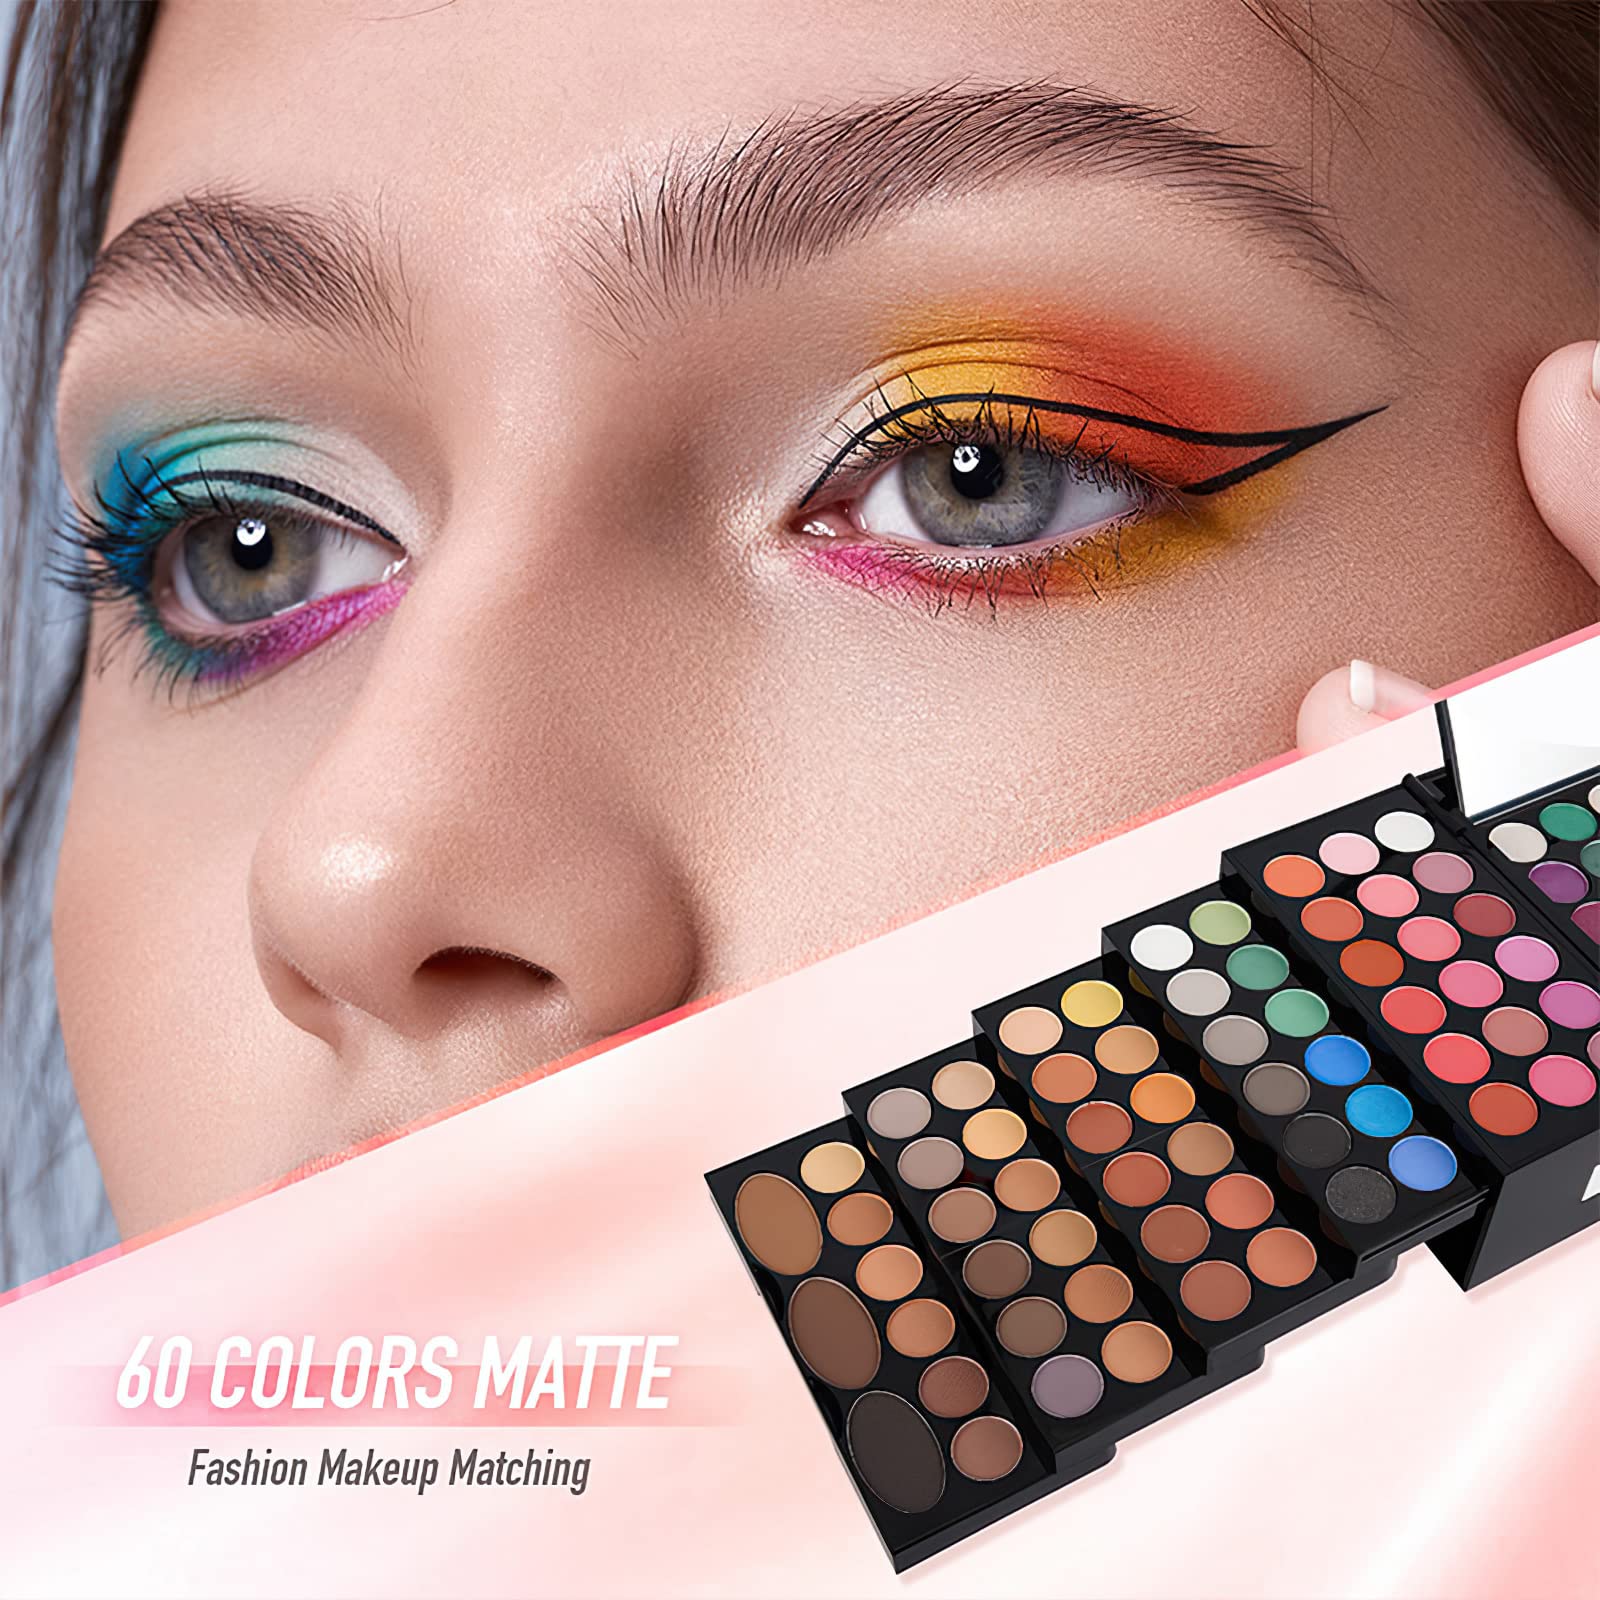 UNIFULL 148 Colors Makeup Palette Set Kit Combination , All In One Makeup Gift Set for women girls, Professional makeup Full Kit